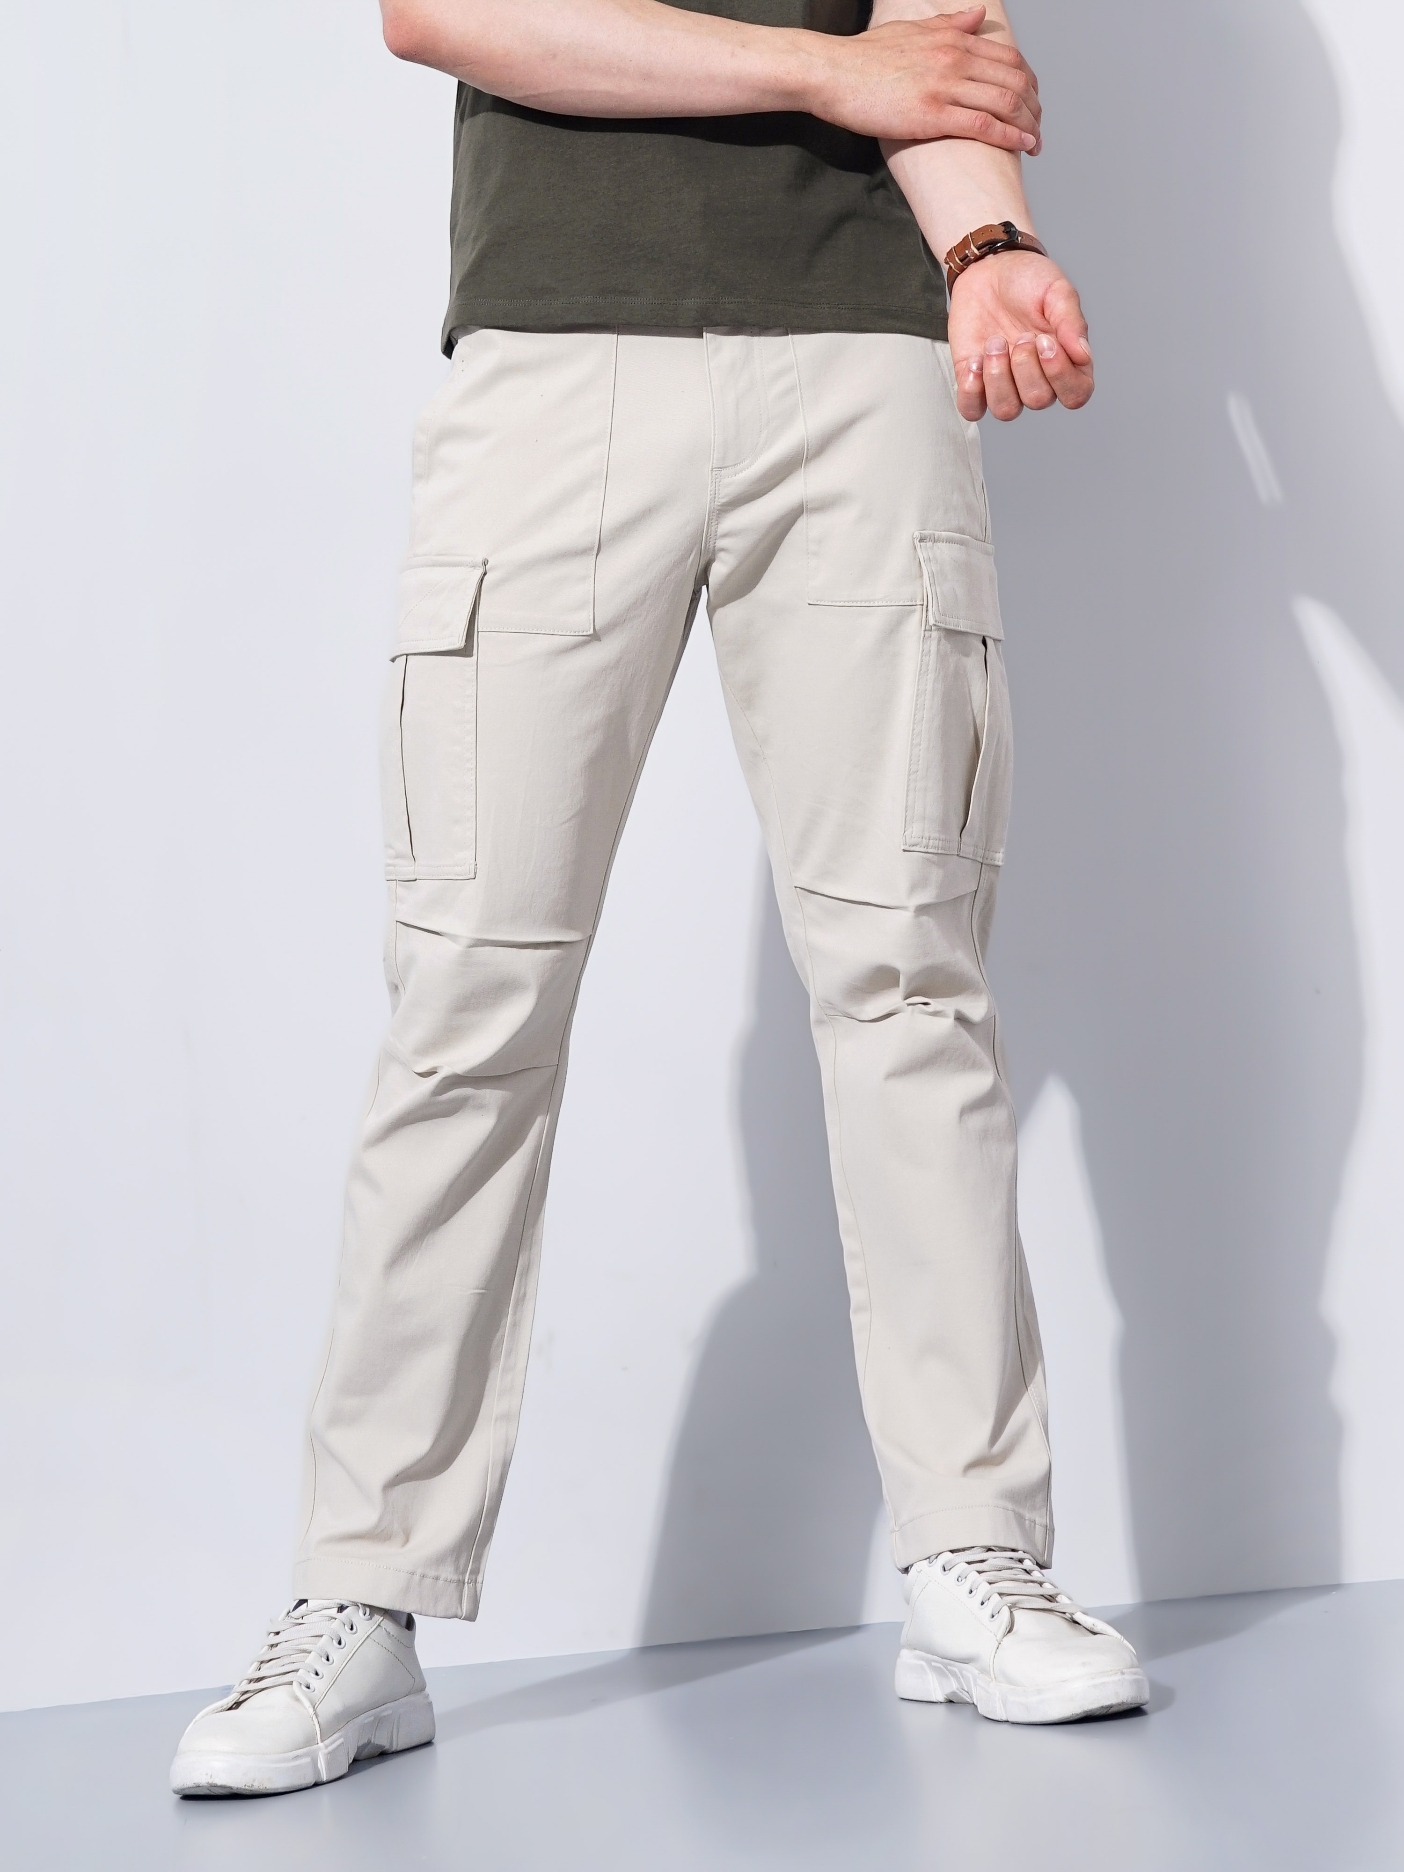 The North Face Mens Cargo Pants Medium Converts to Shorts Adjustable Strap  Khaki | eBay